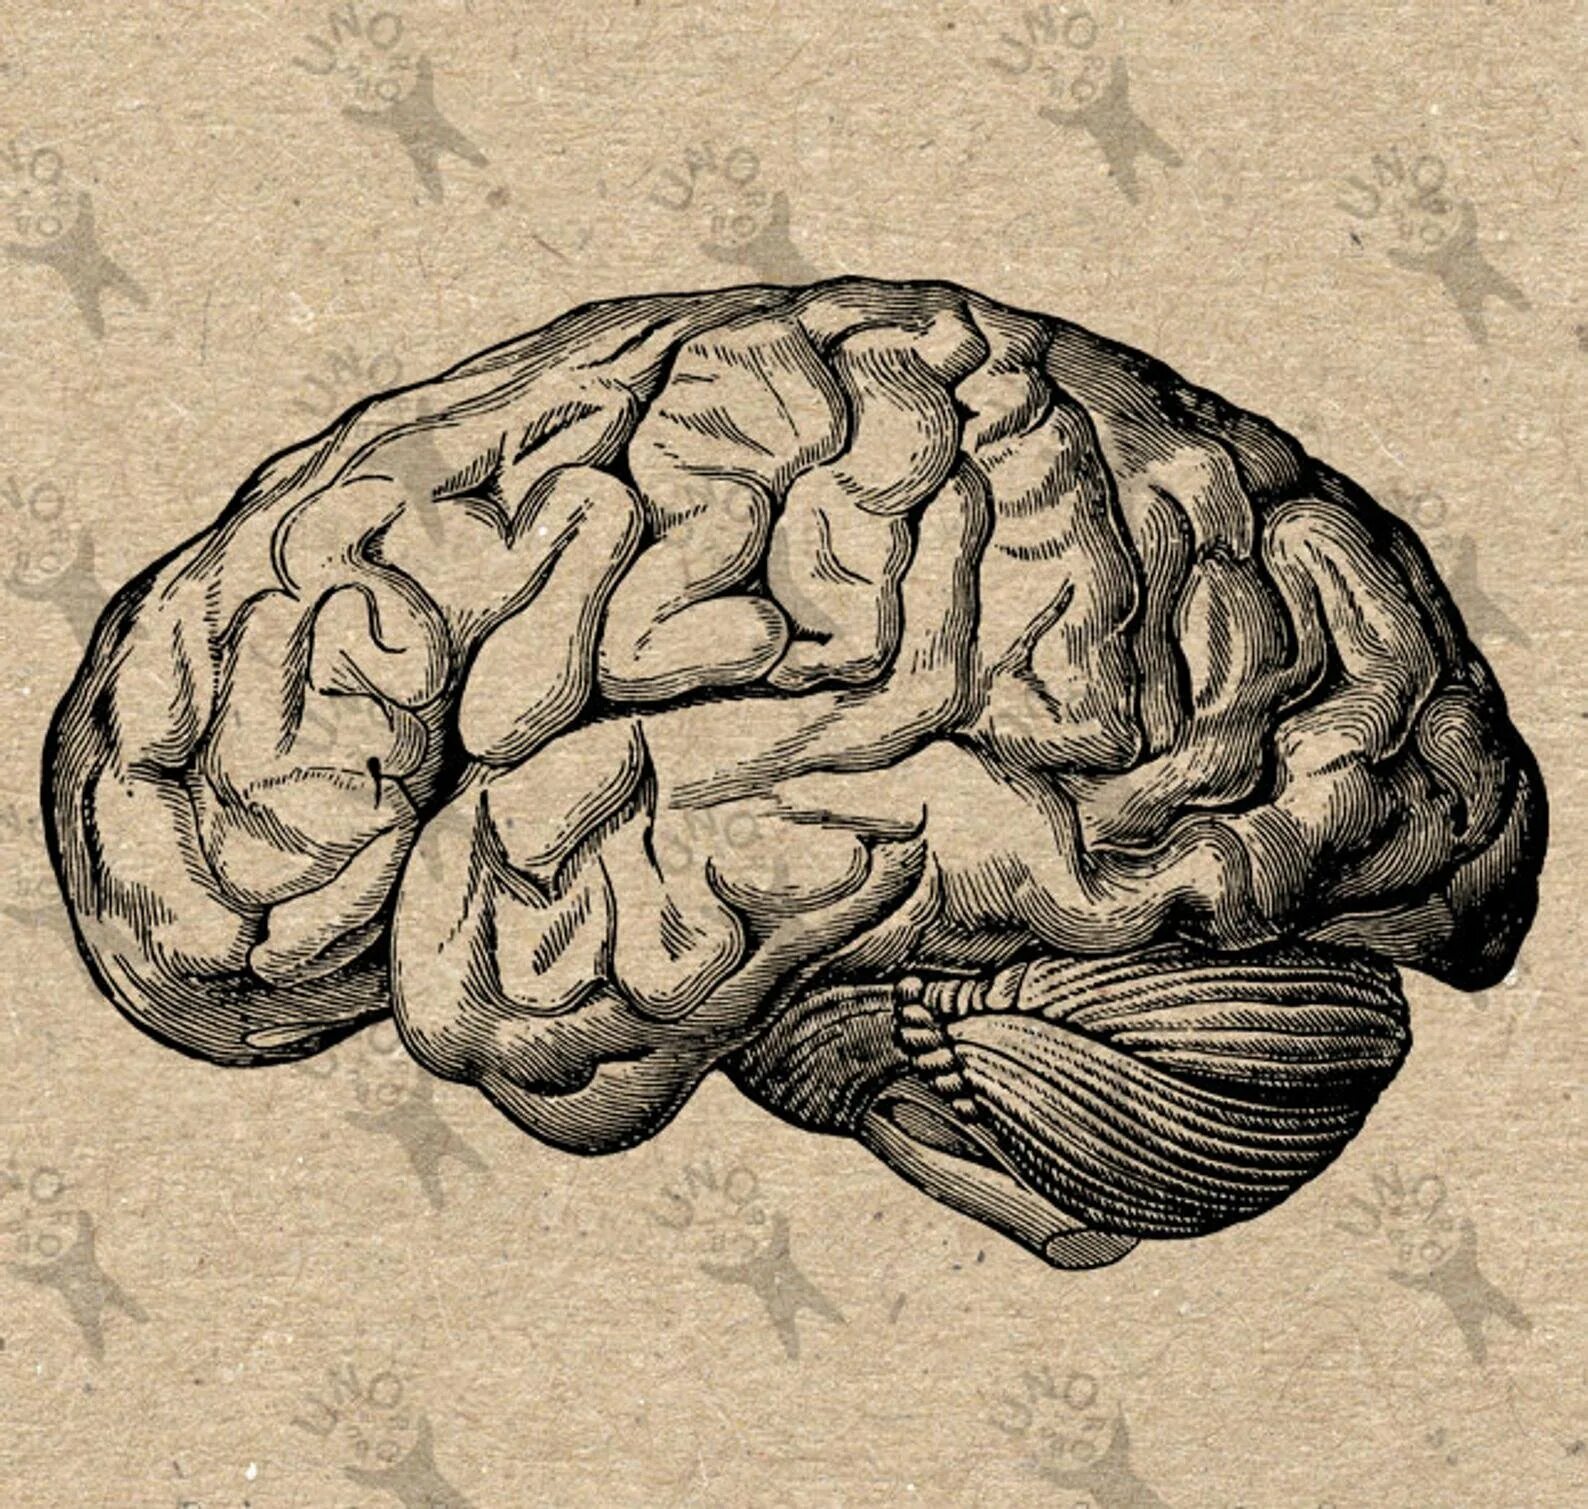 Как появился мозг. Мозг рисунок. Мозг человека арт. Мозг картинка. Мозг человека рисунок.